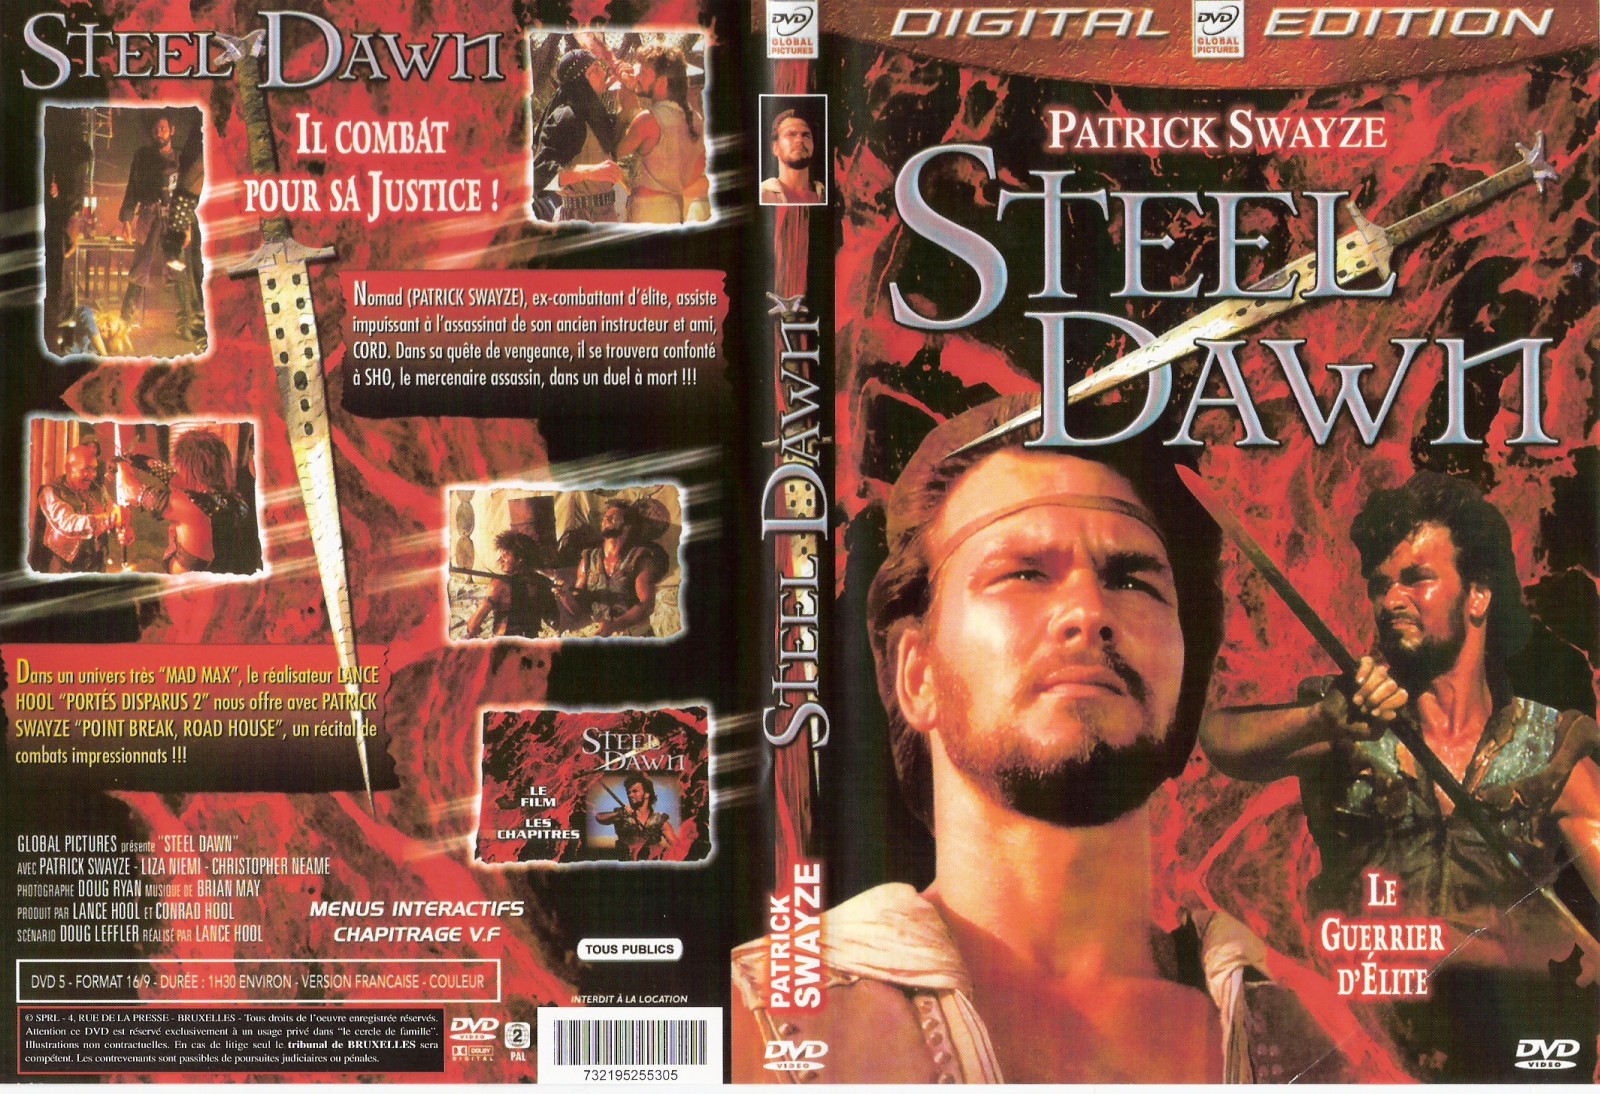 Jaquette DVD Steel Dawn v2